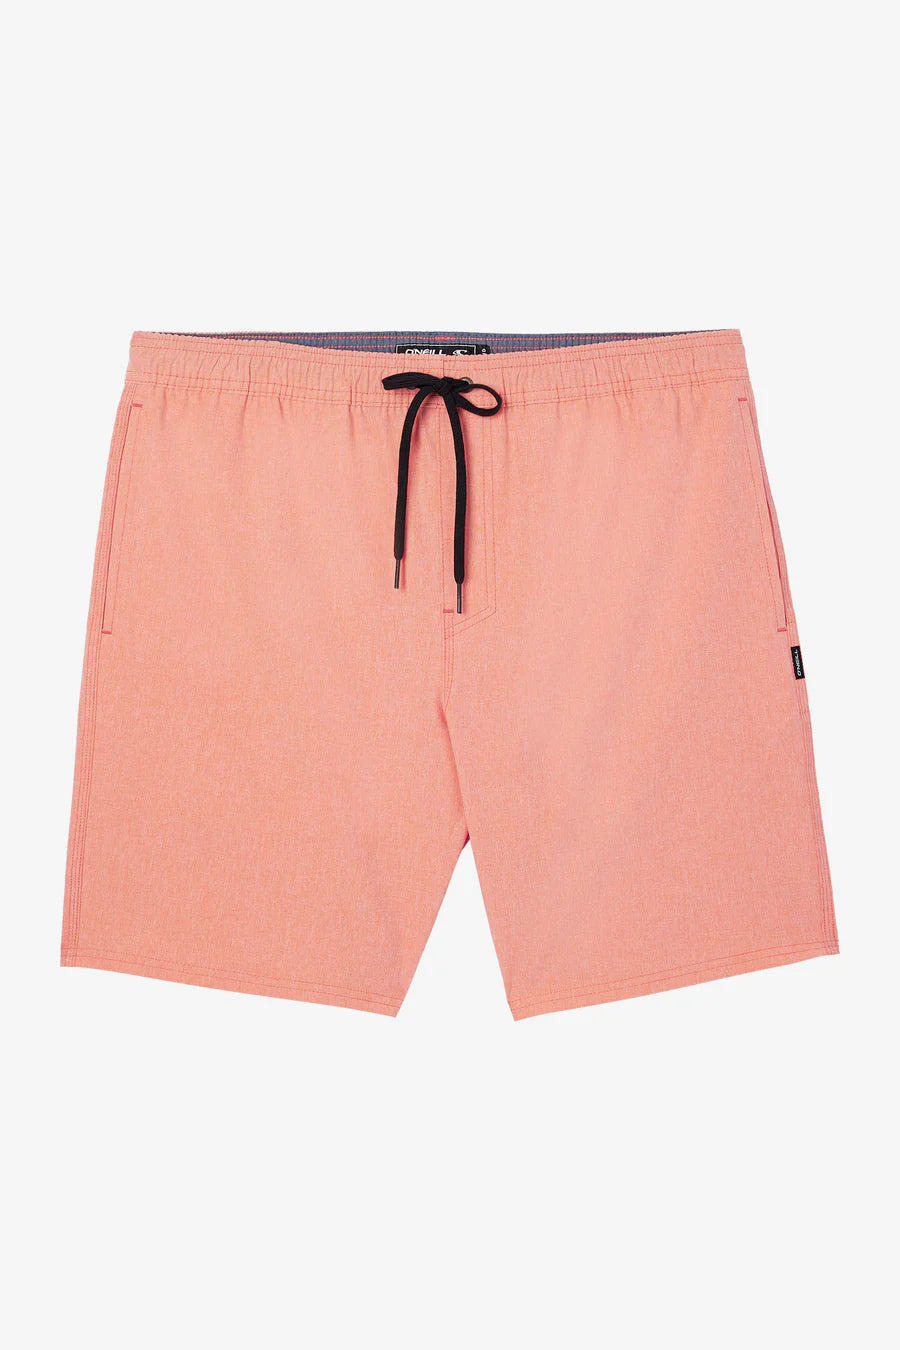 Reserve 18" Elastic Waist Hybrid Shorts - Coral